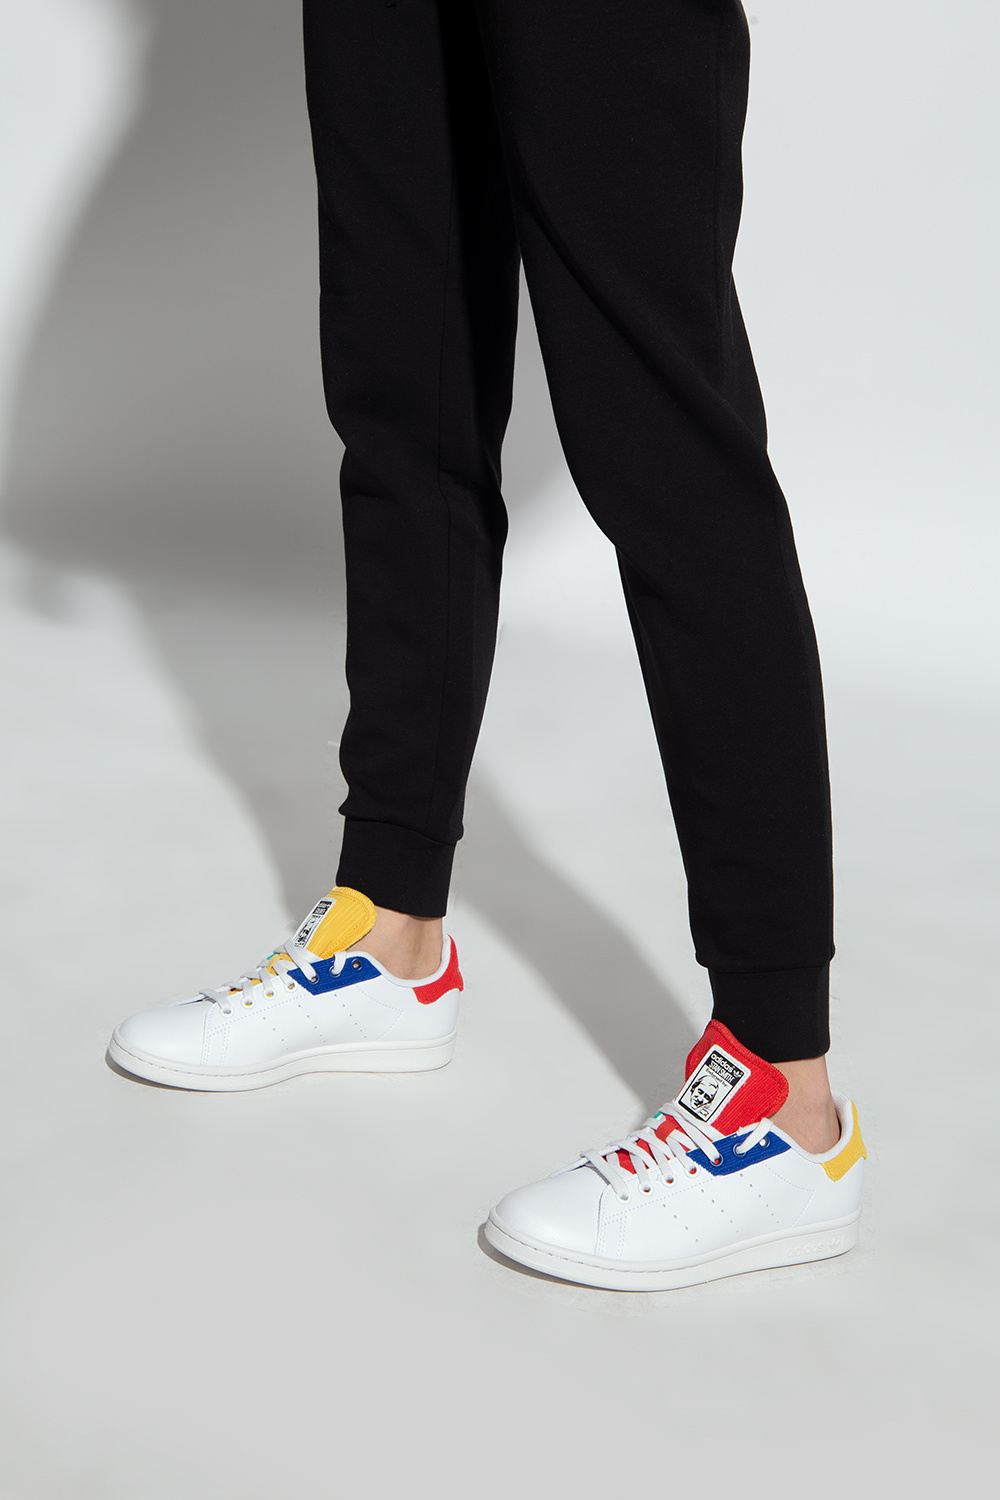 adidas Originals Stan Smith sneakers in triple black